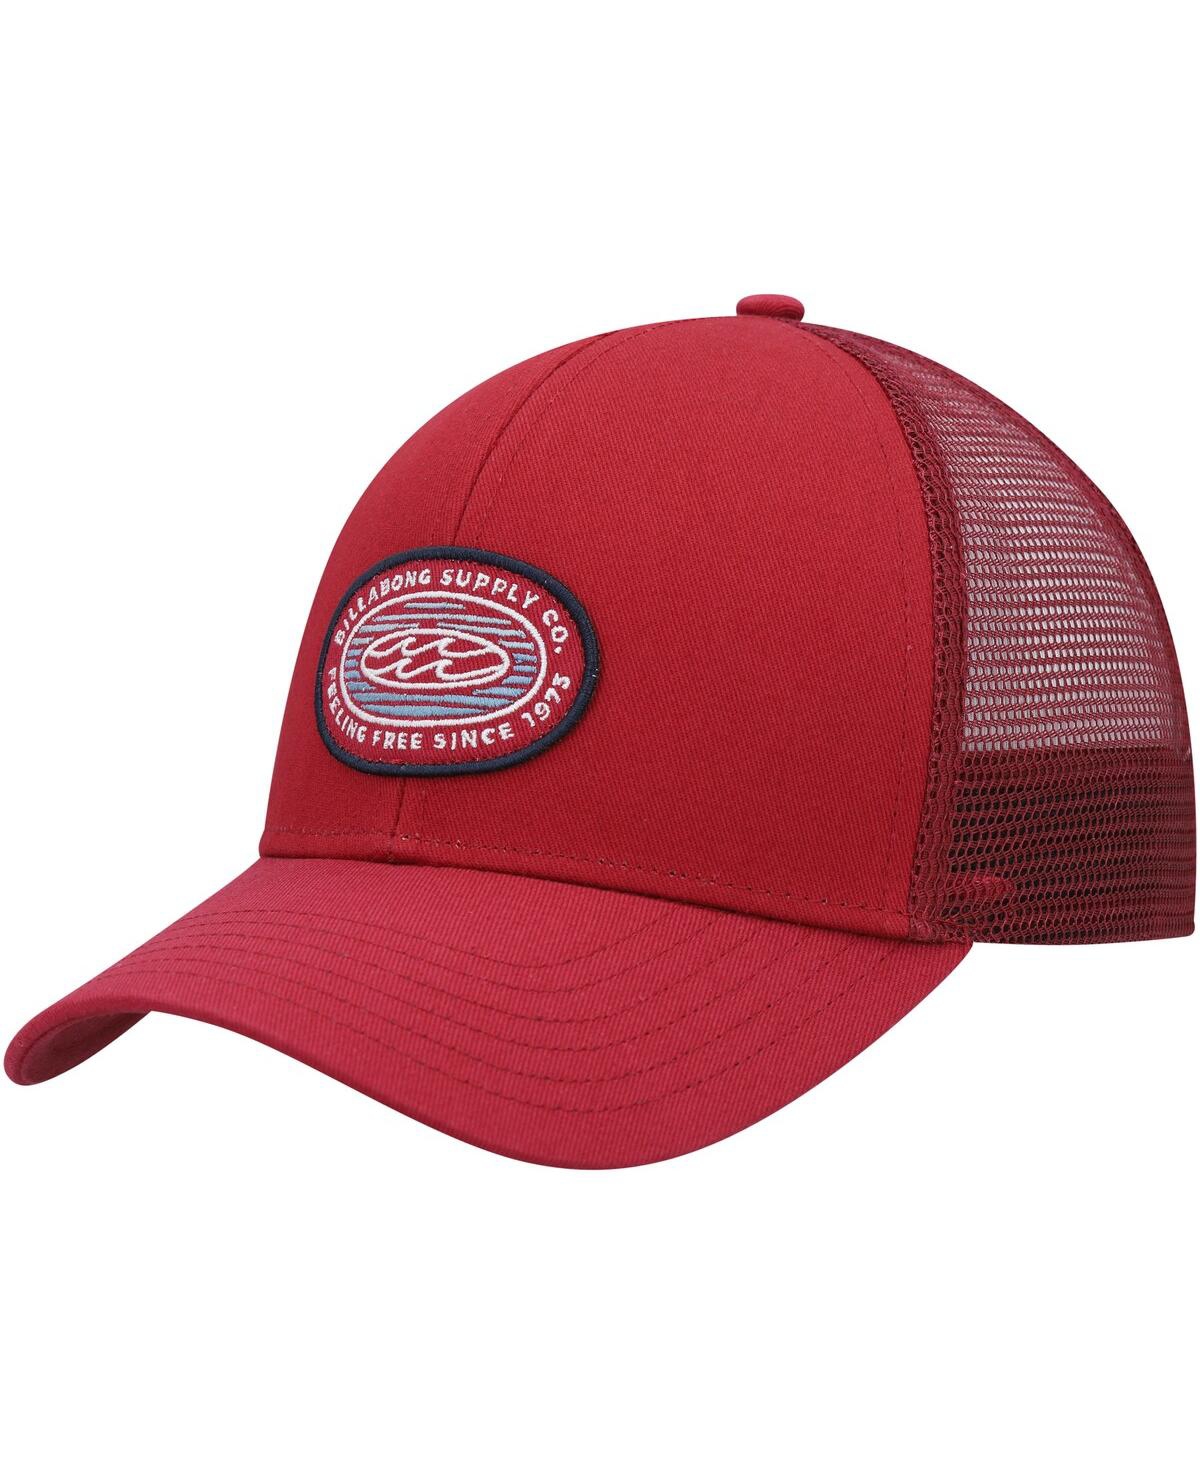 Men's Billabong Red Walled Trucker Adjustable Snapback Hat - Red